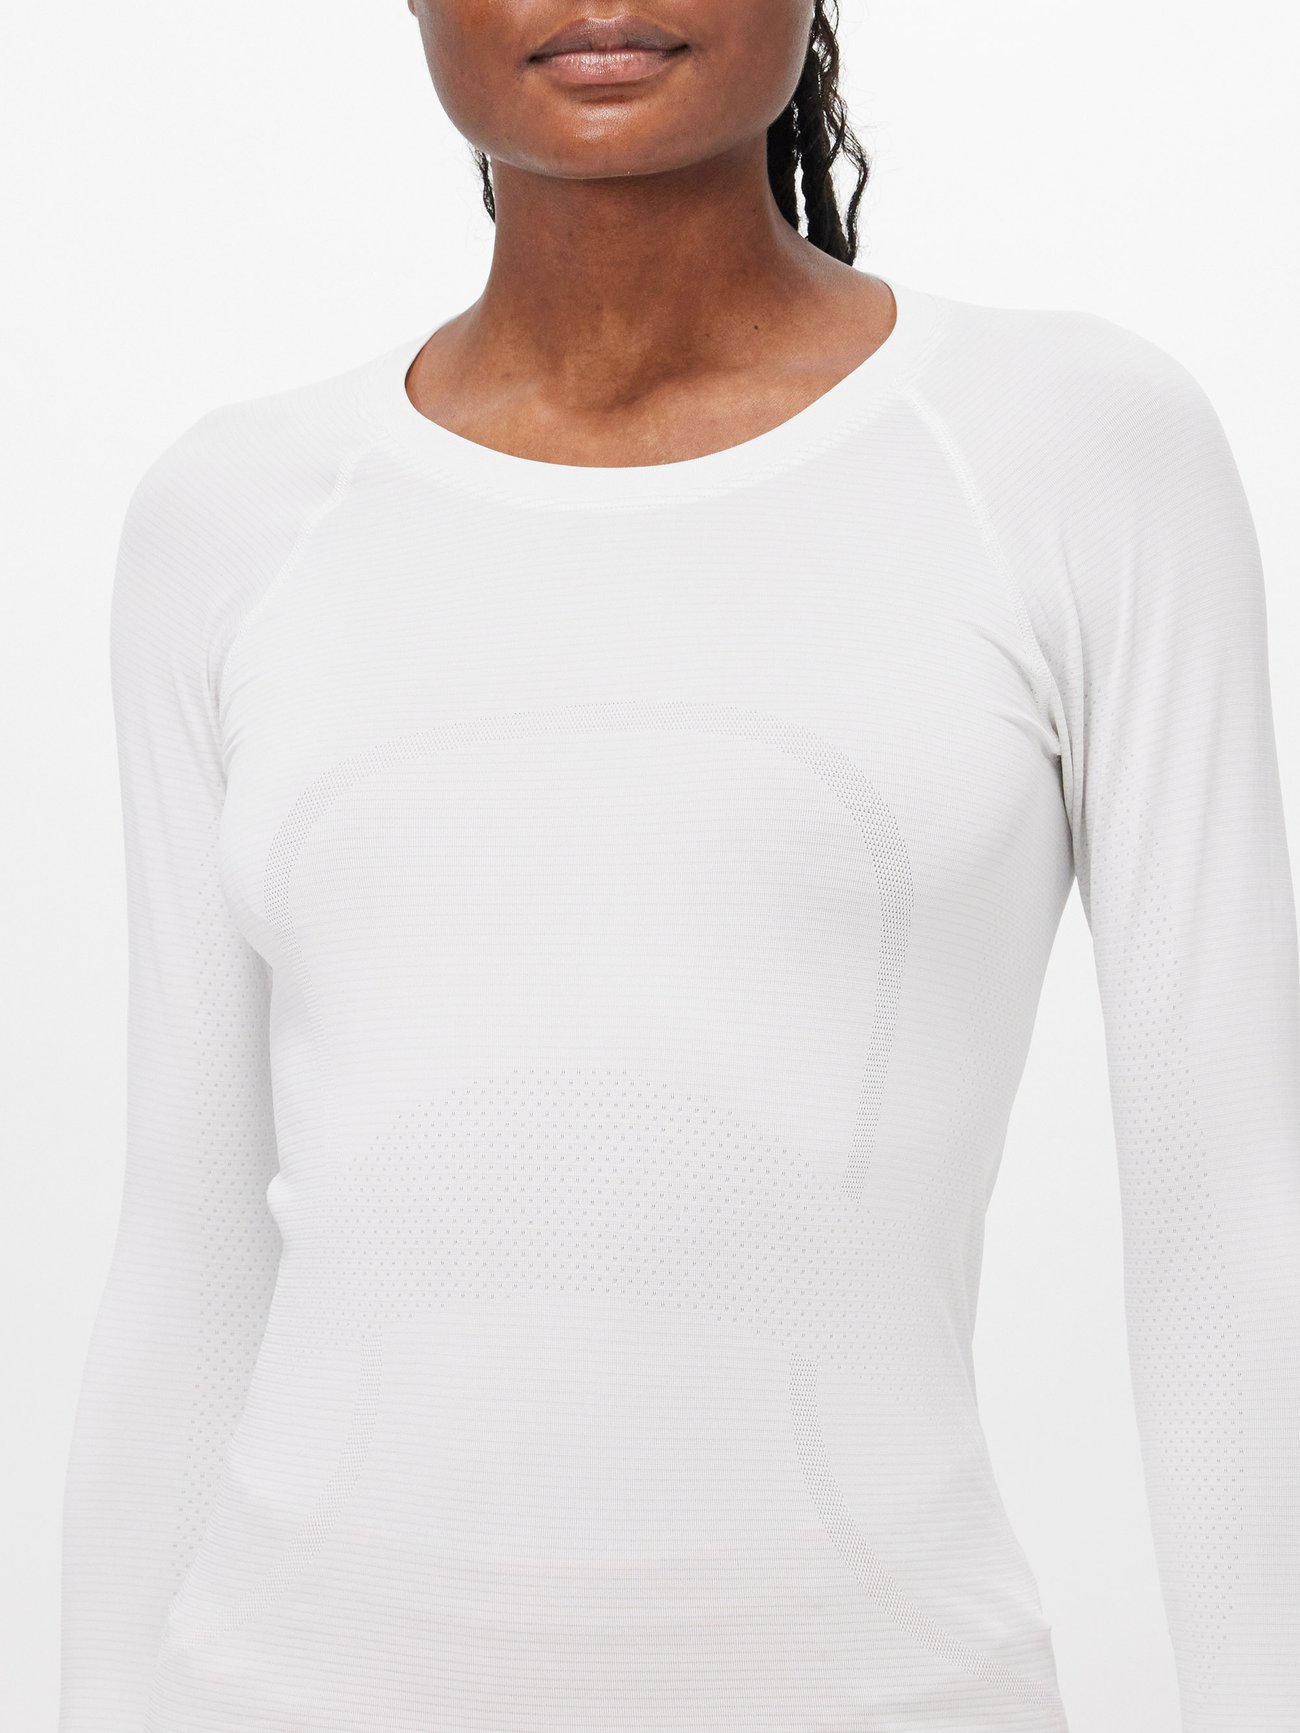 White Swiftly Tech long-sleeve jersey top, lululemon